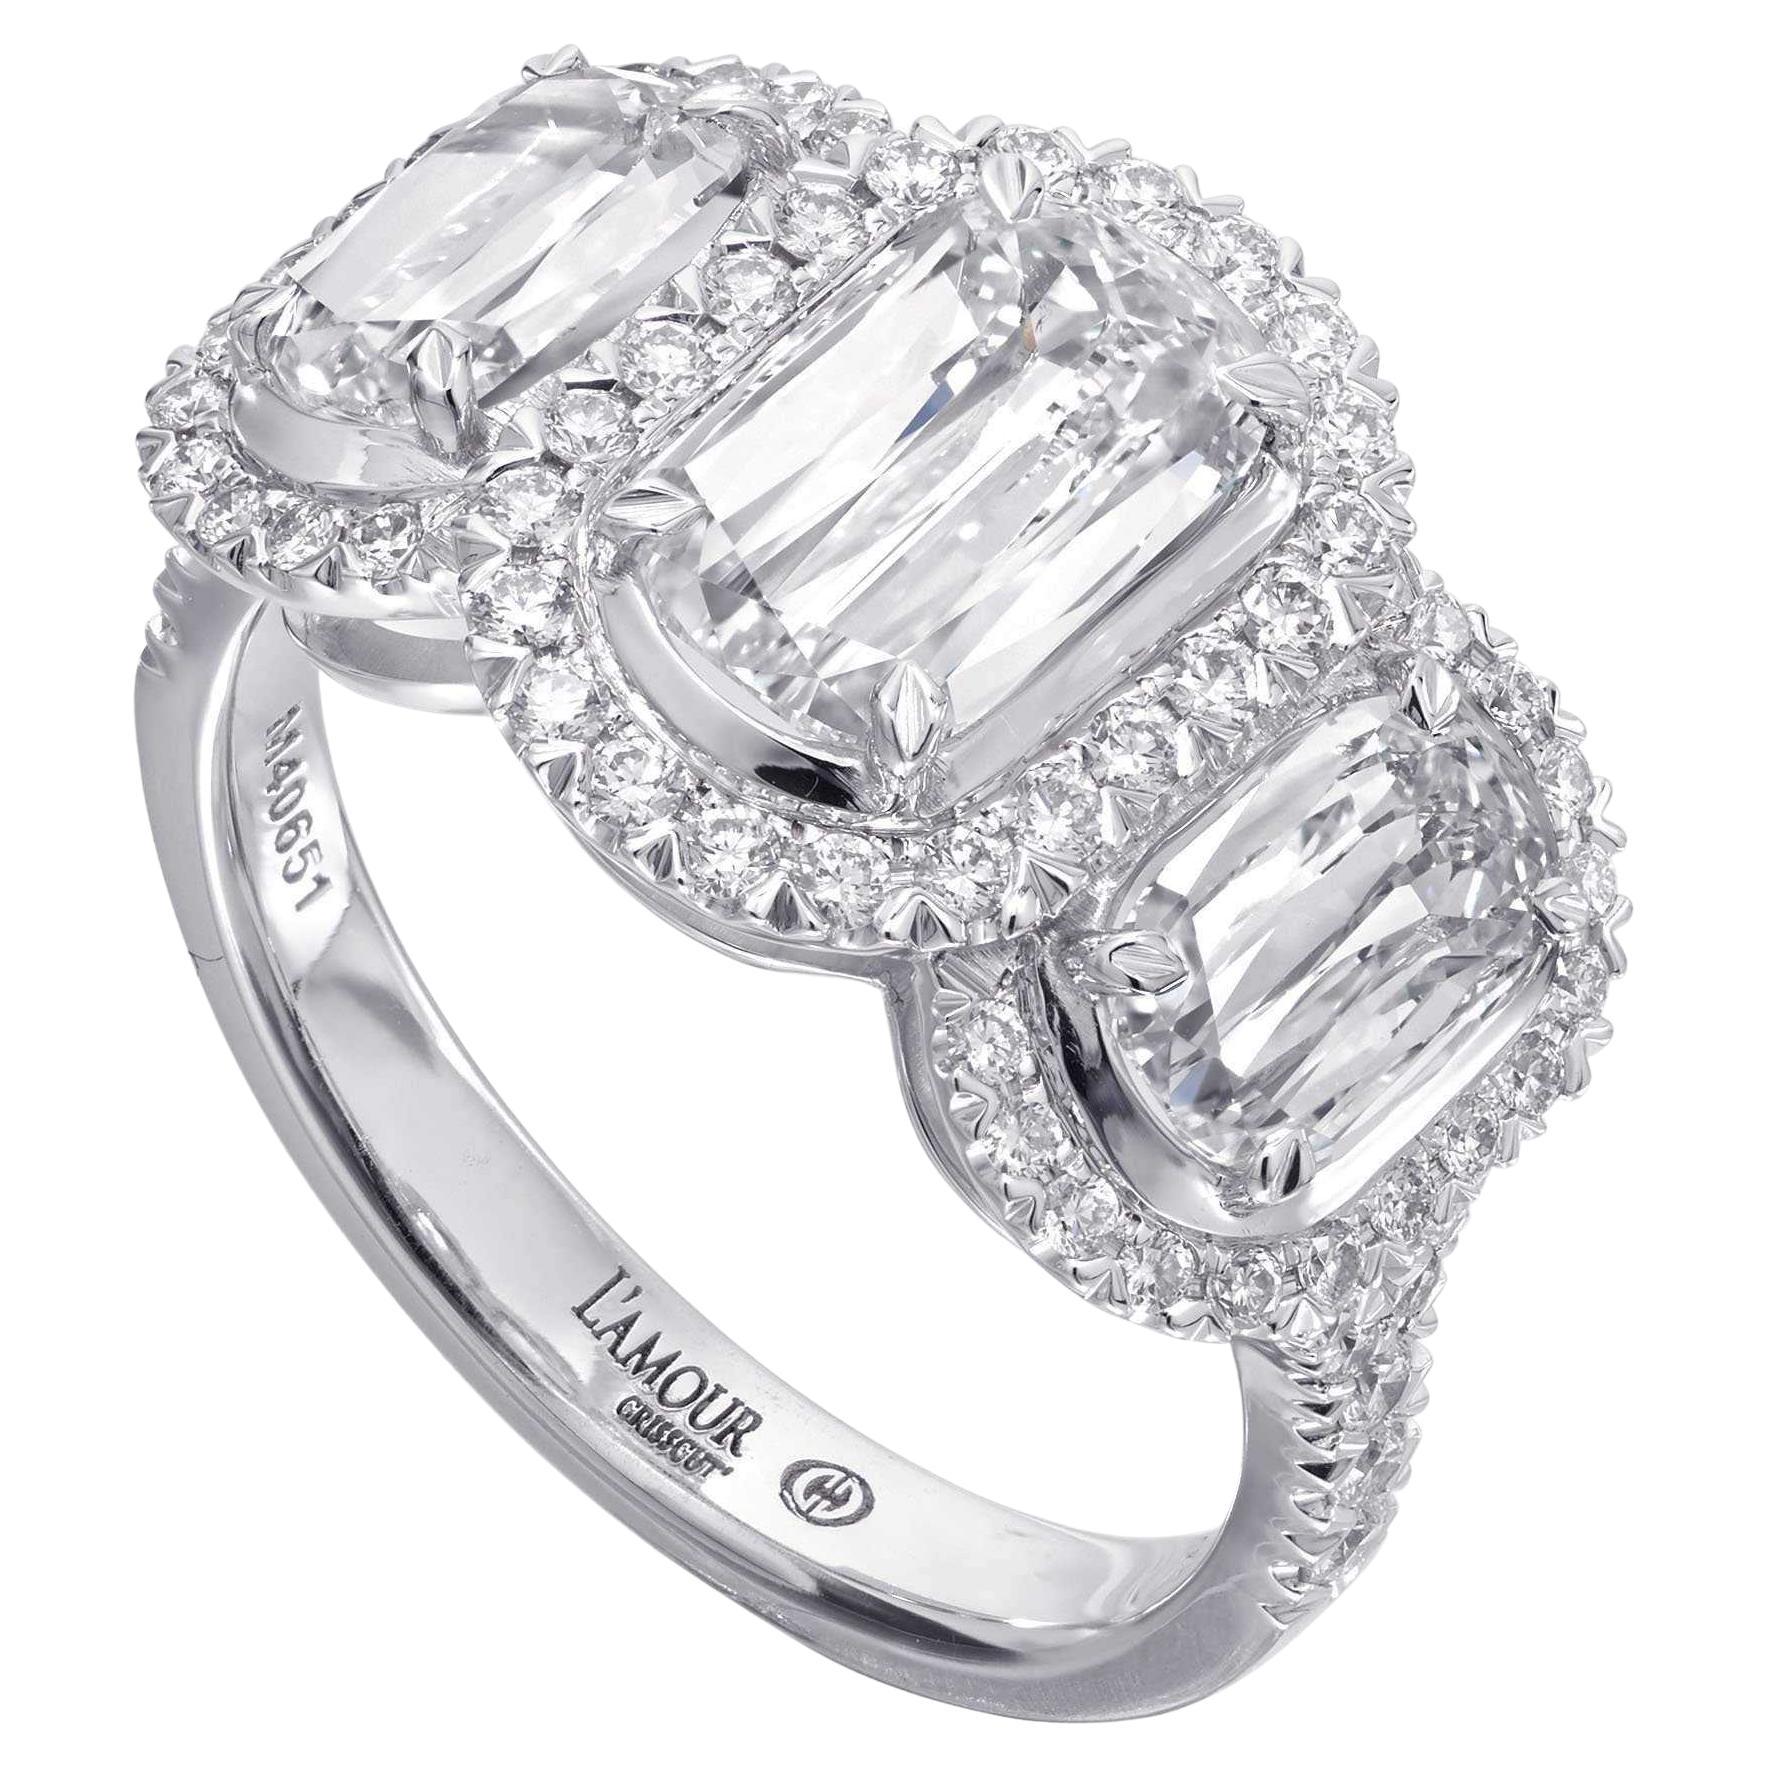 Christopher Designs L'Amour Crisscut 3 Diamond Halo Ring Set in 18K White Gold